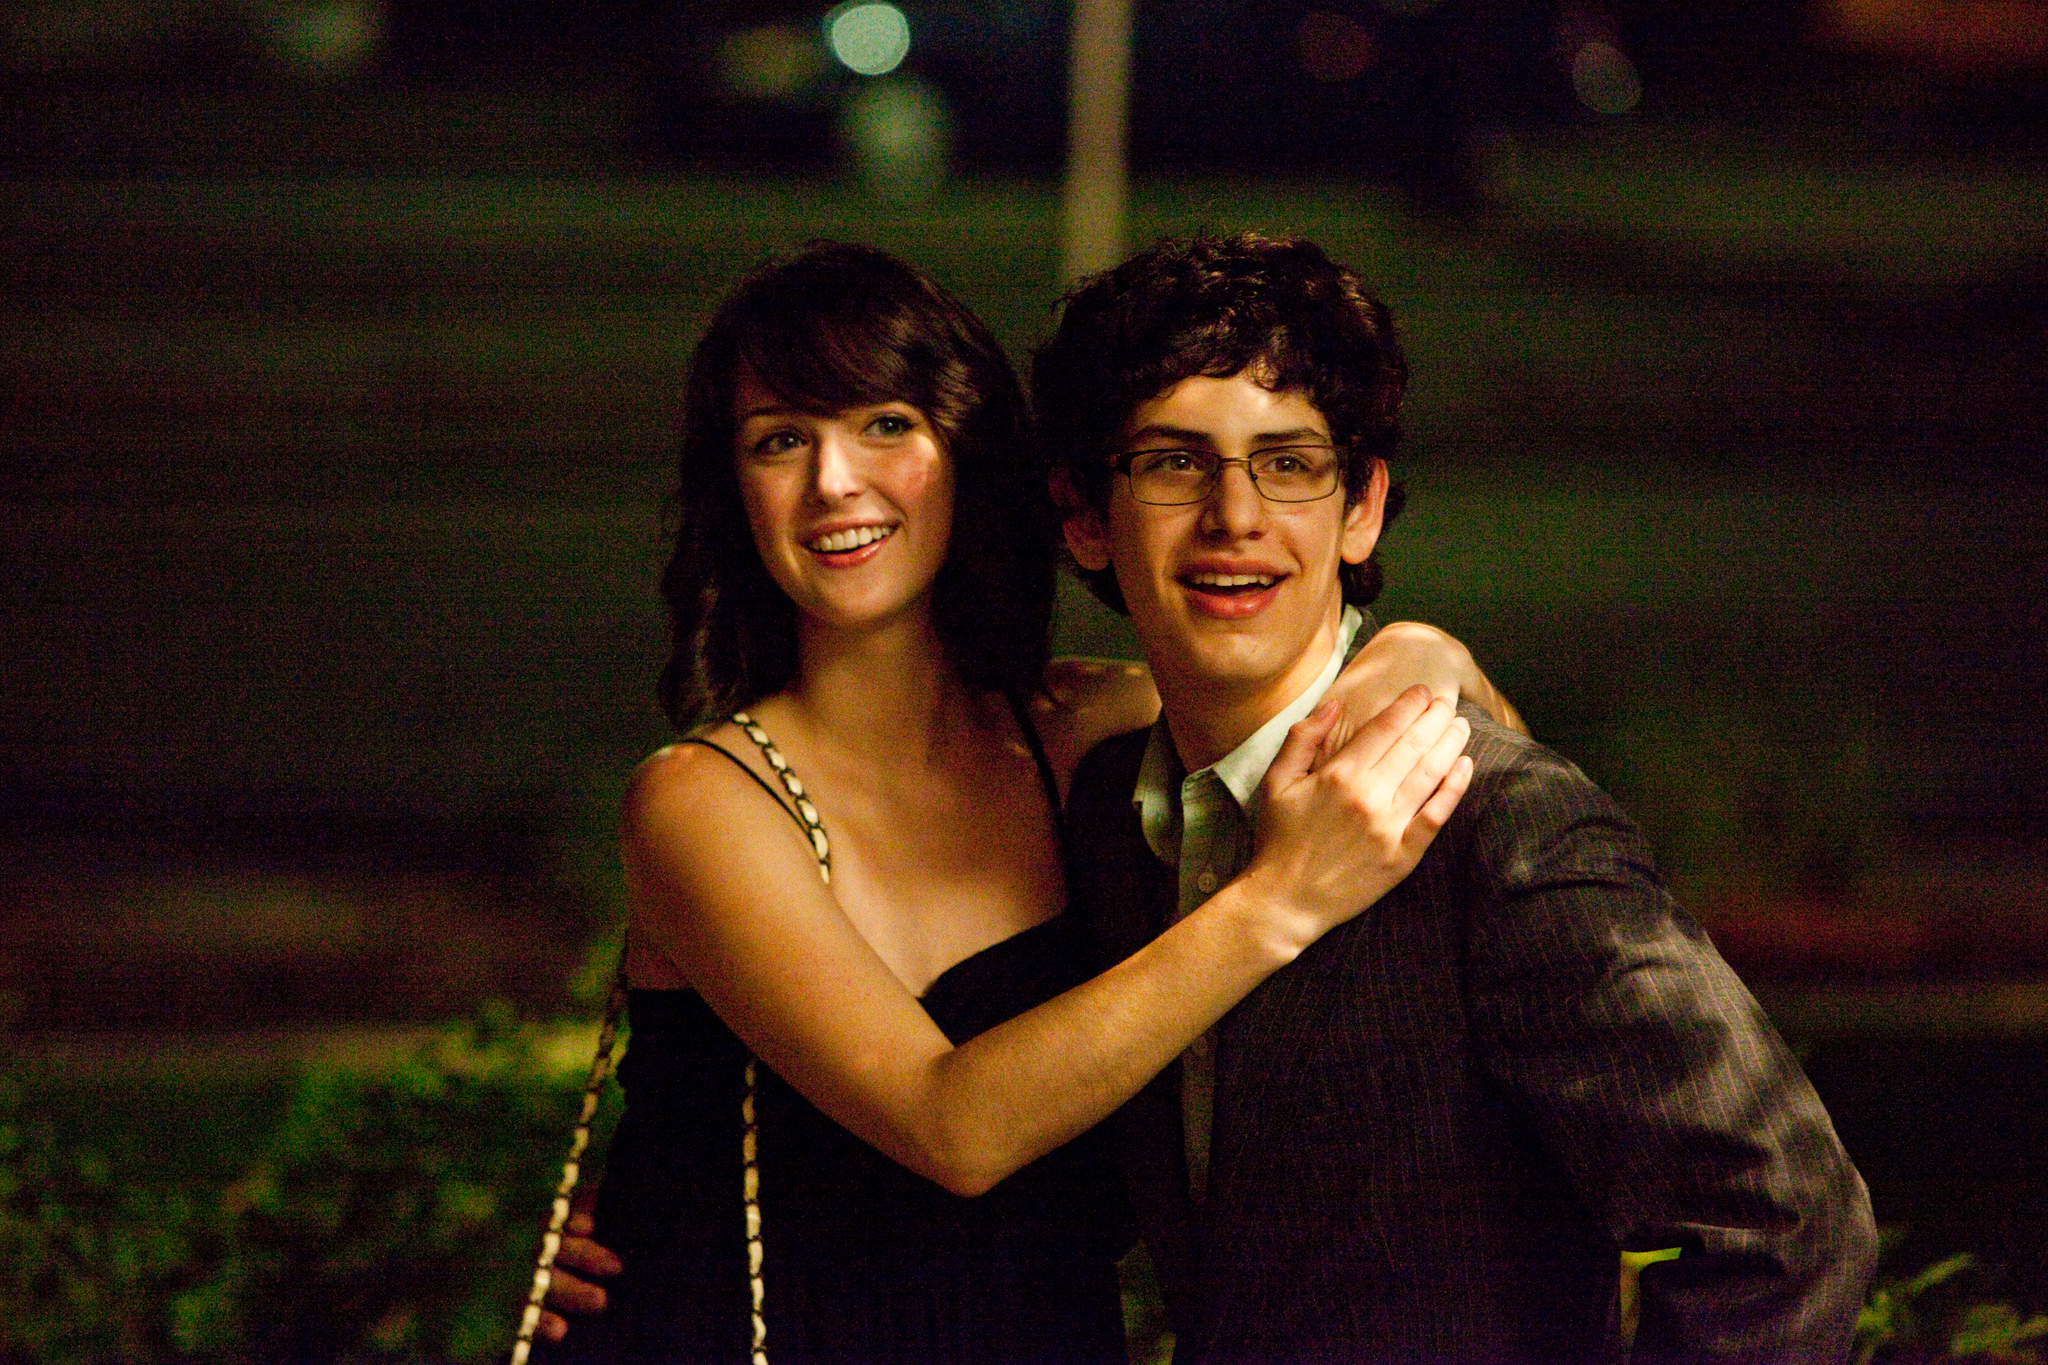 Still of Matt Bennett and Nicole Weaver in The Virginity Hit (2010)